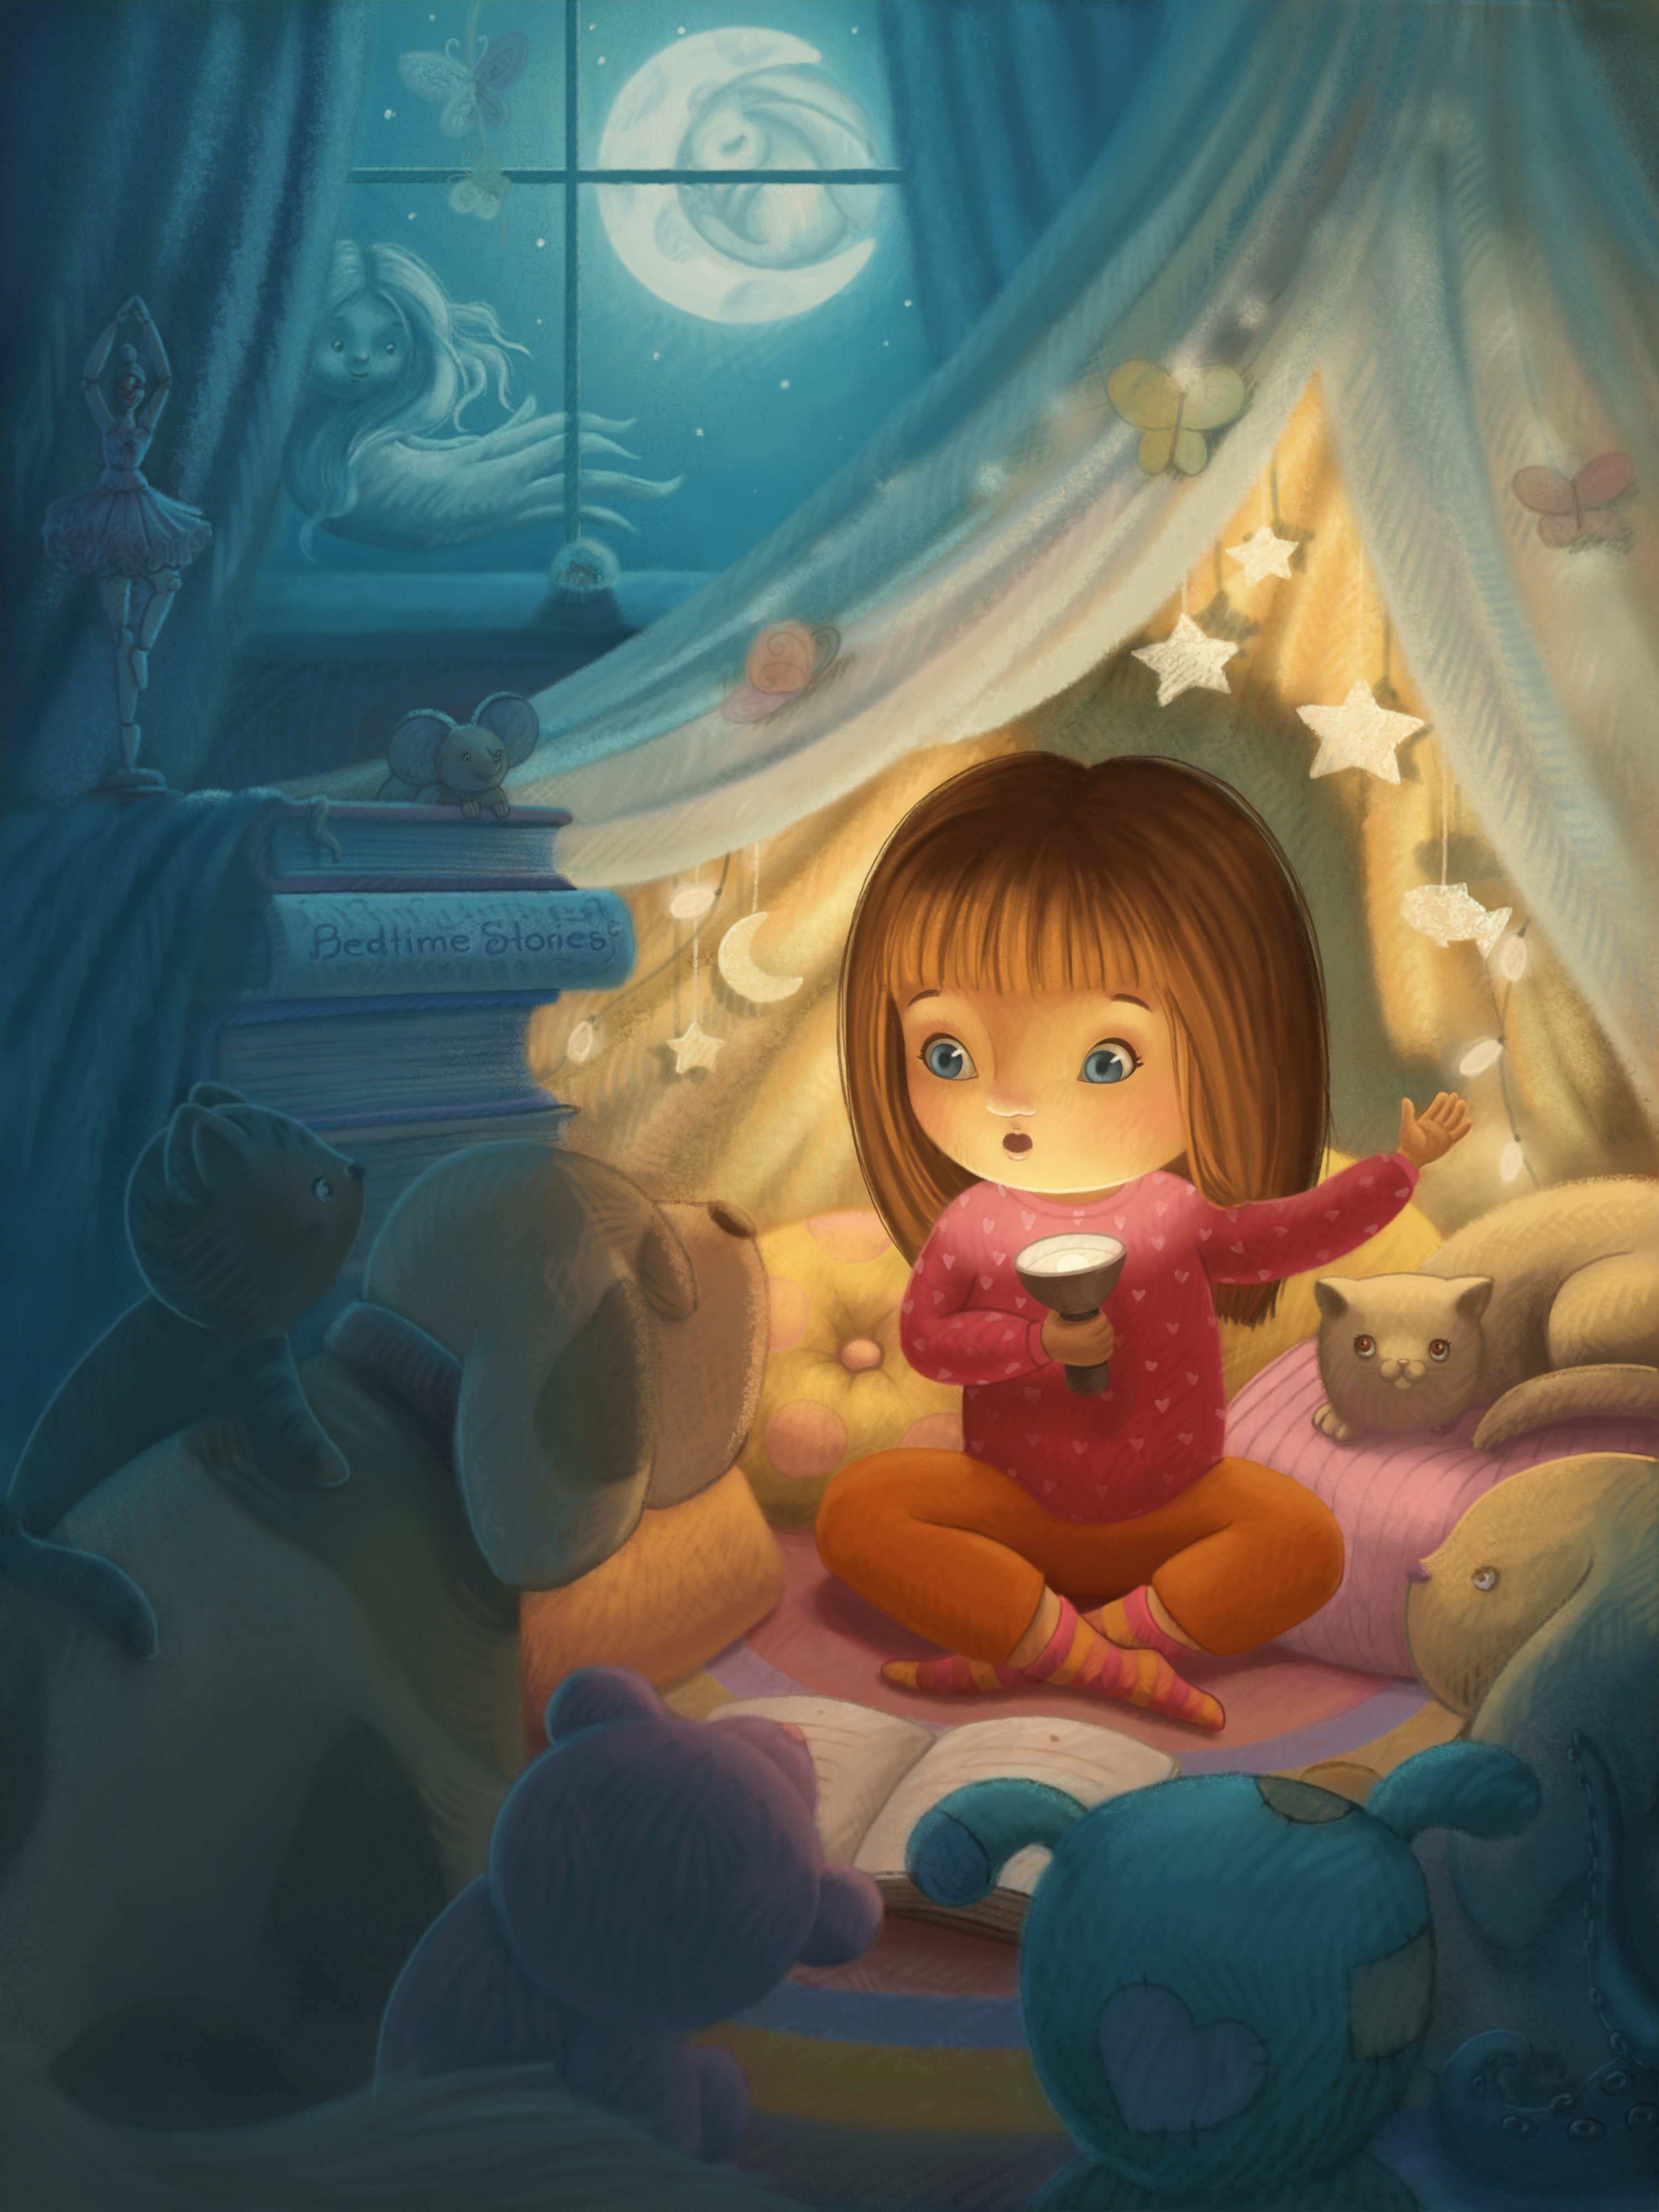 Bedtime stories, Fairy, Moon, Animals, Toys, Cartoon, Digital art